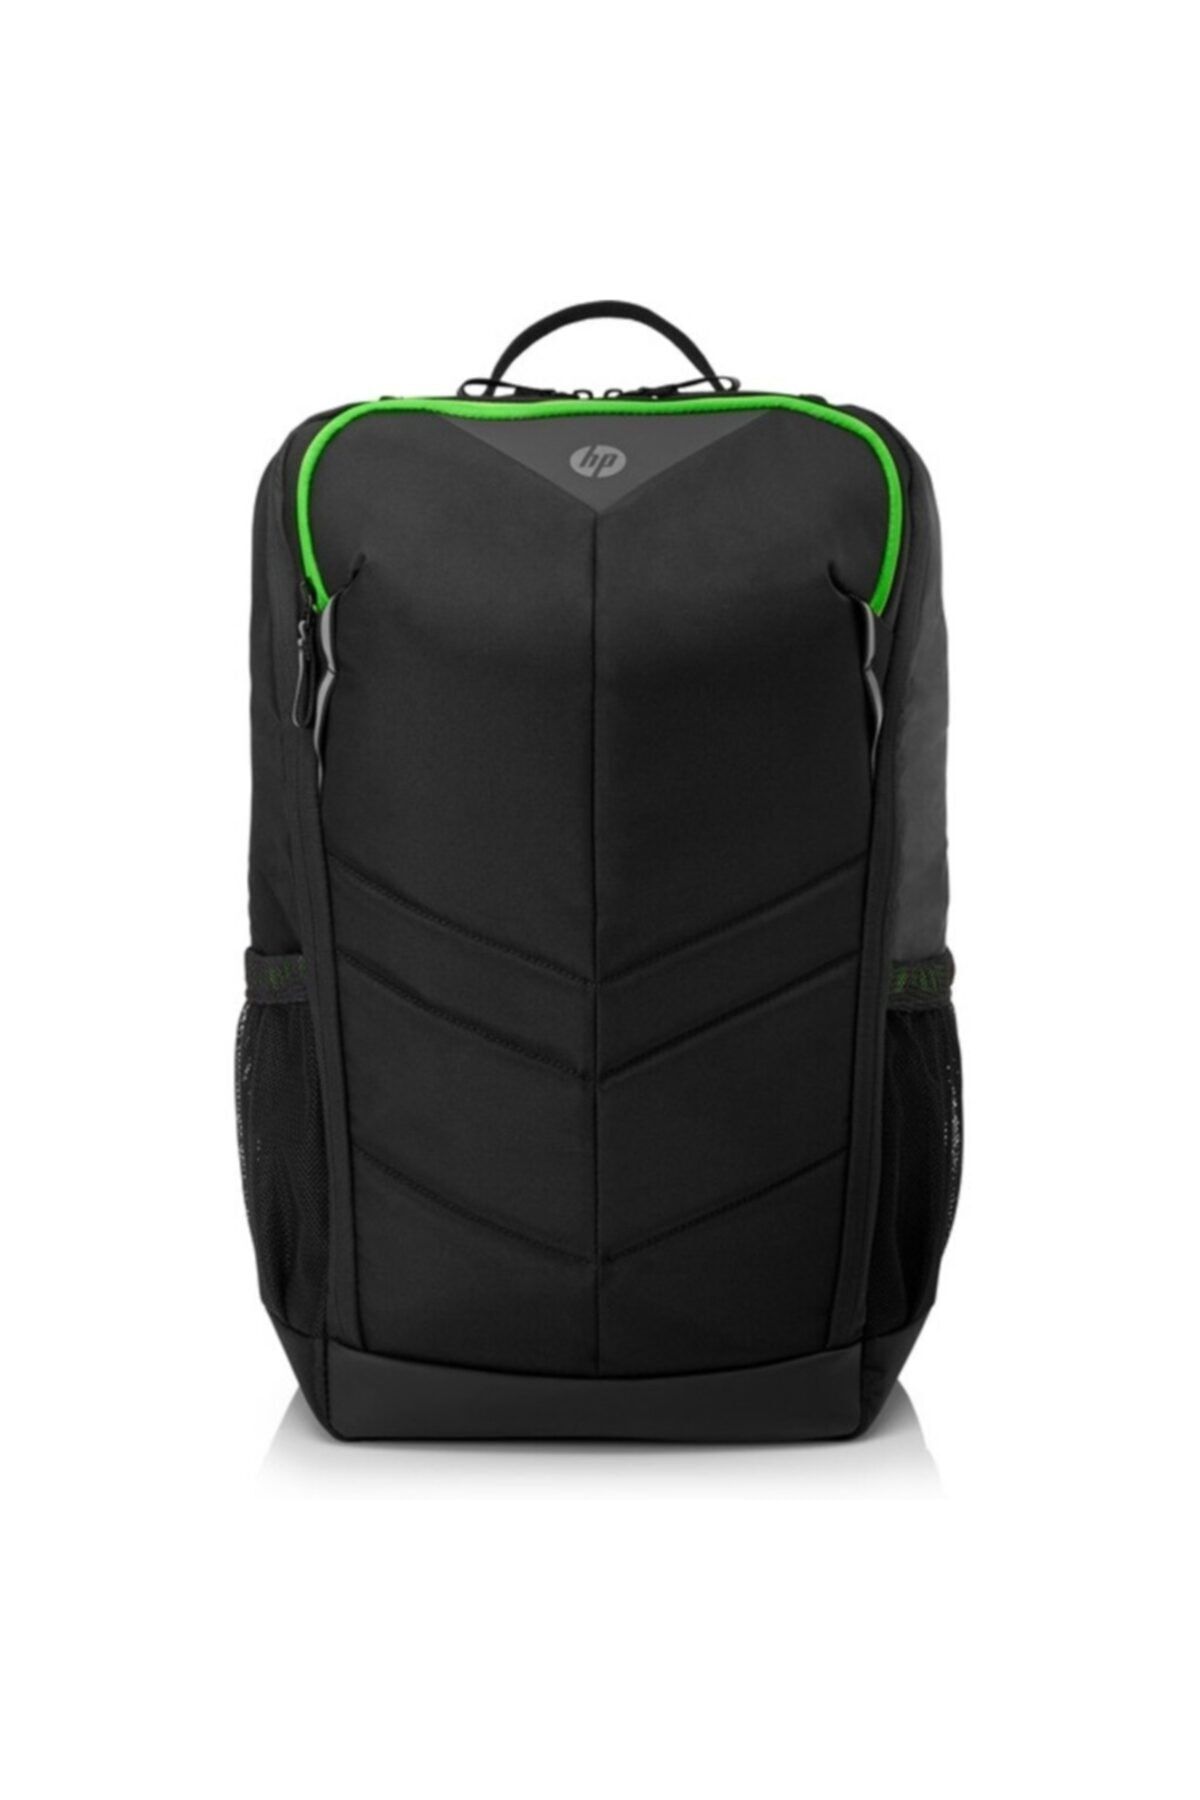 HP Pavilion Gaming Backpack 400 6eu57aa 15.6" Notebook Sırt Çant